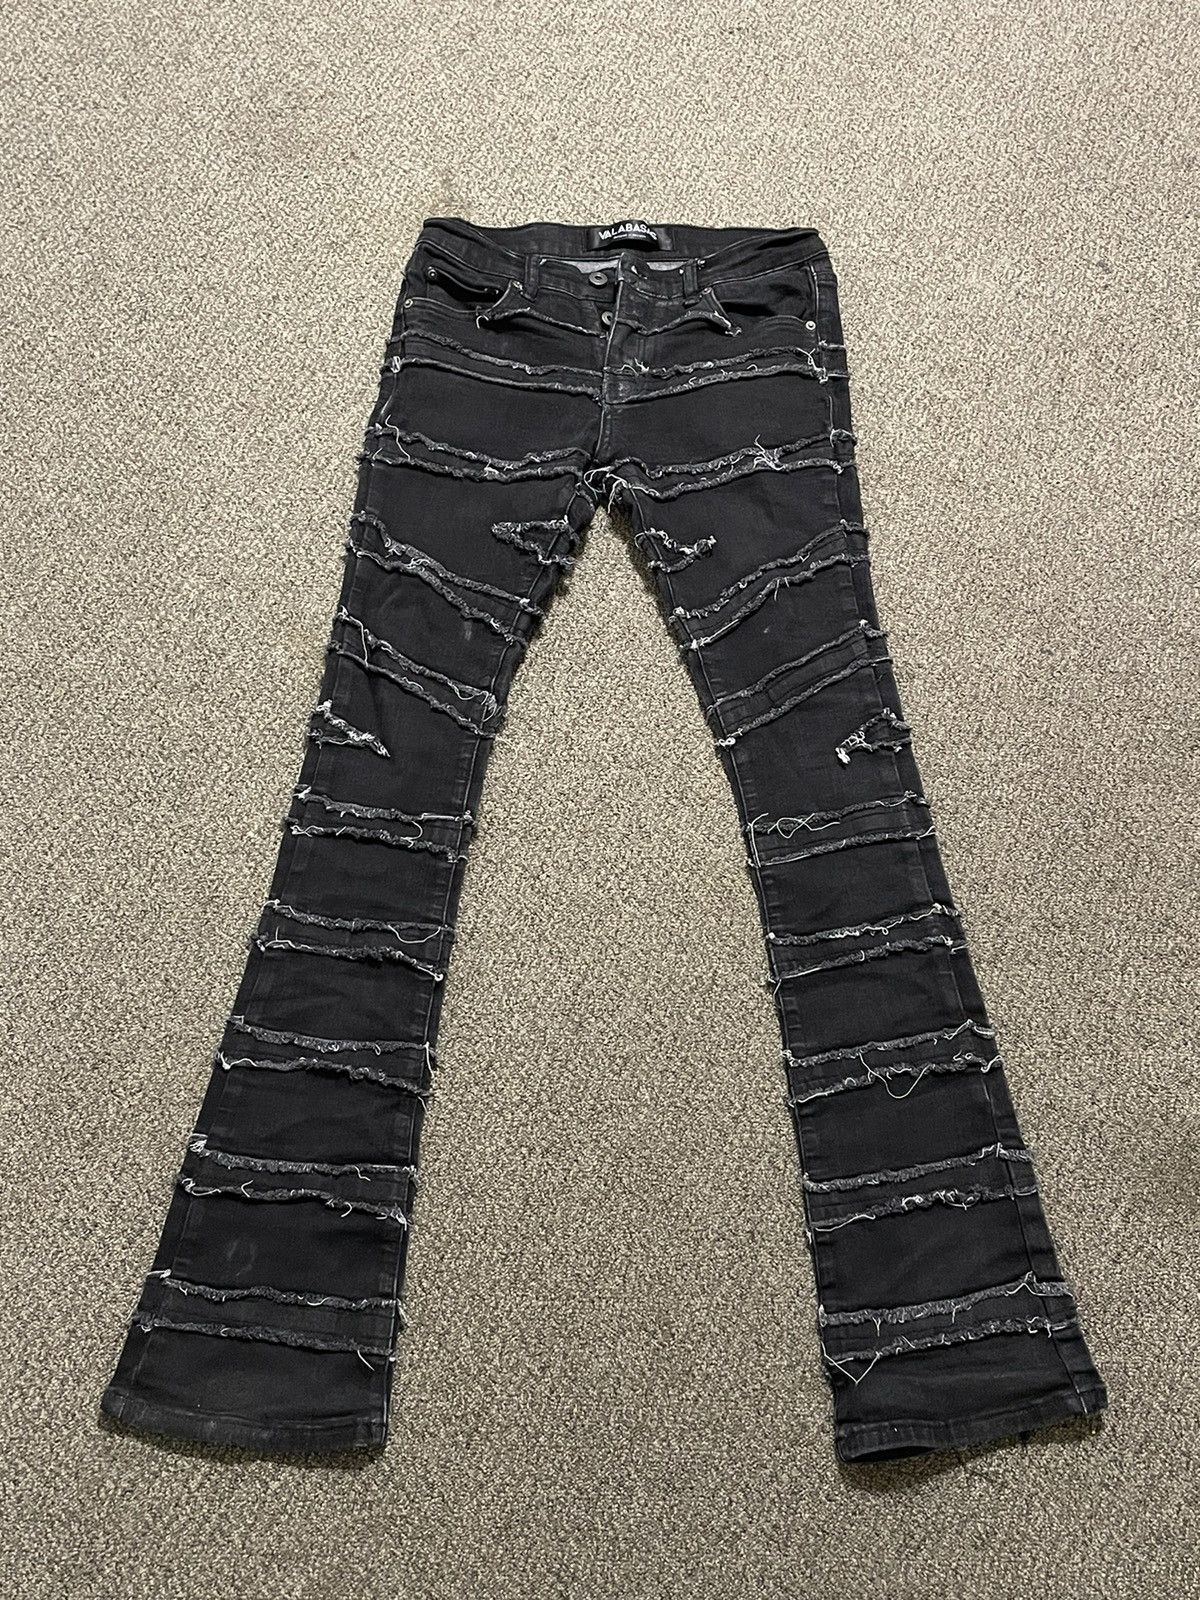 Valabasas Black Distressed Valabasas Flared Jeans | Grailed